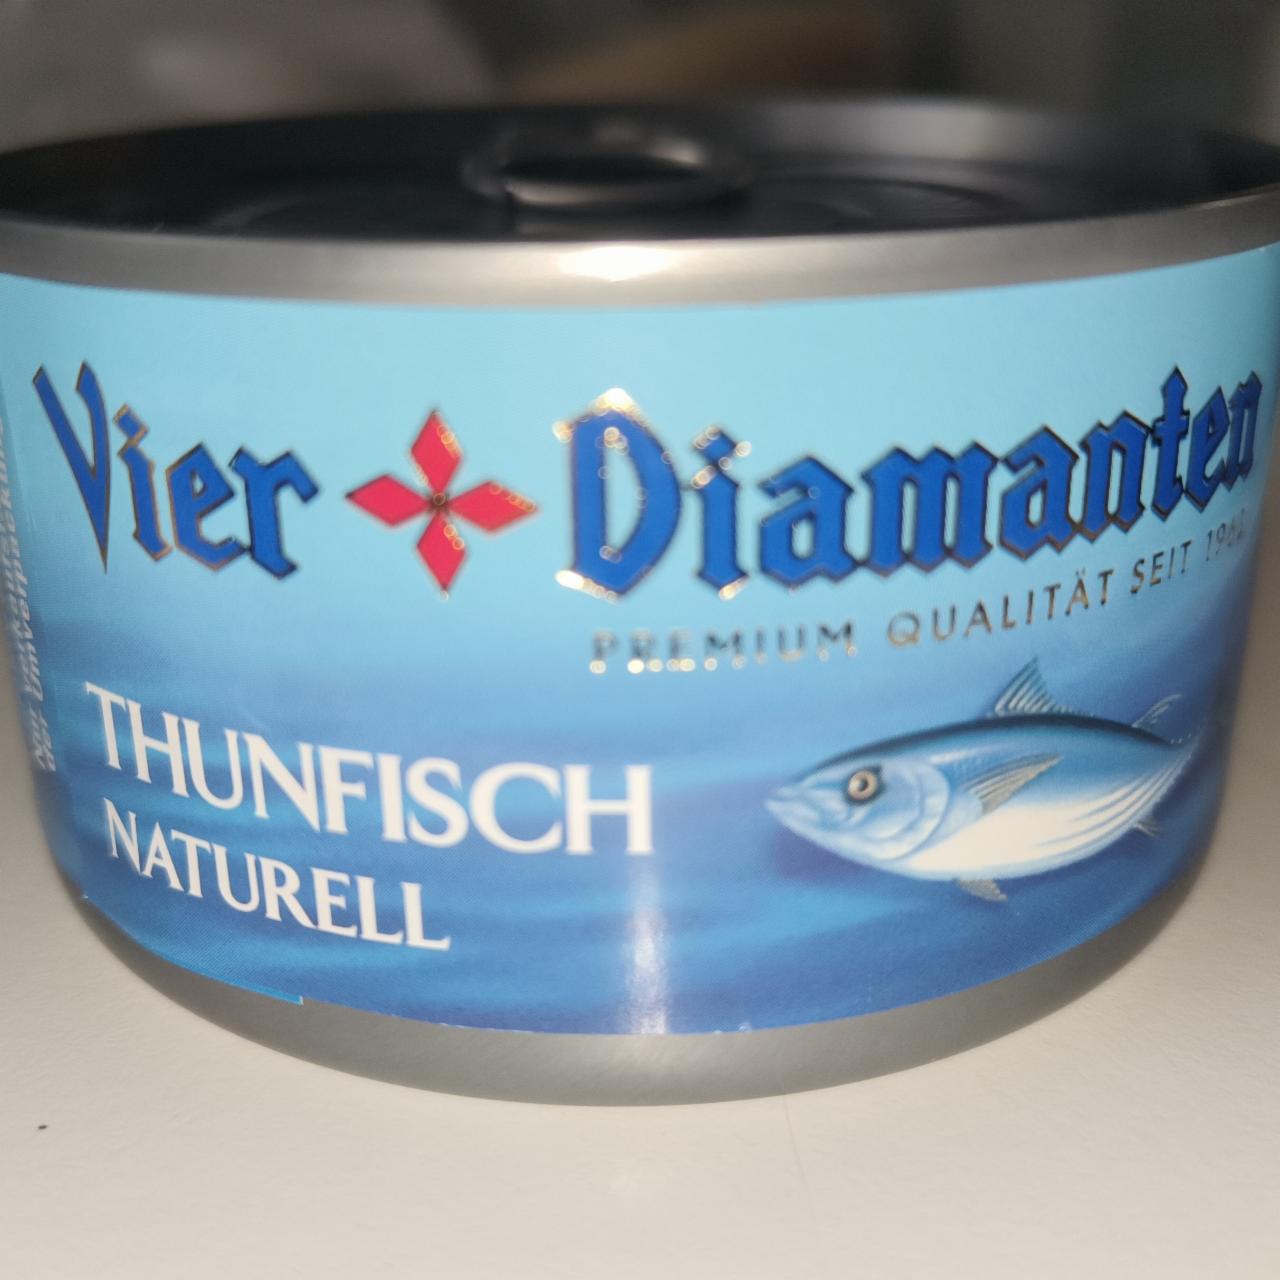 Fotografie - Thunfish Naturell Vier Diamanten